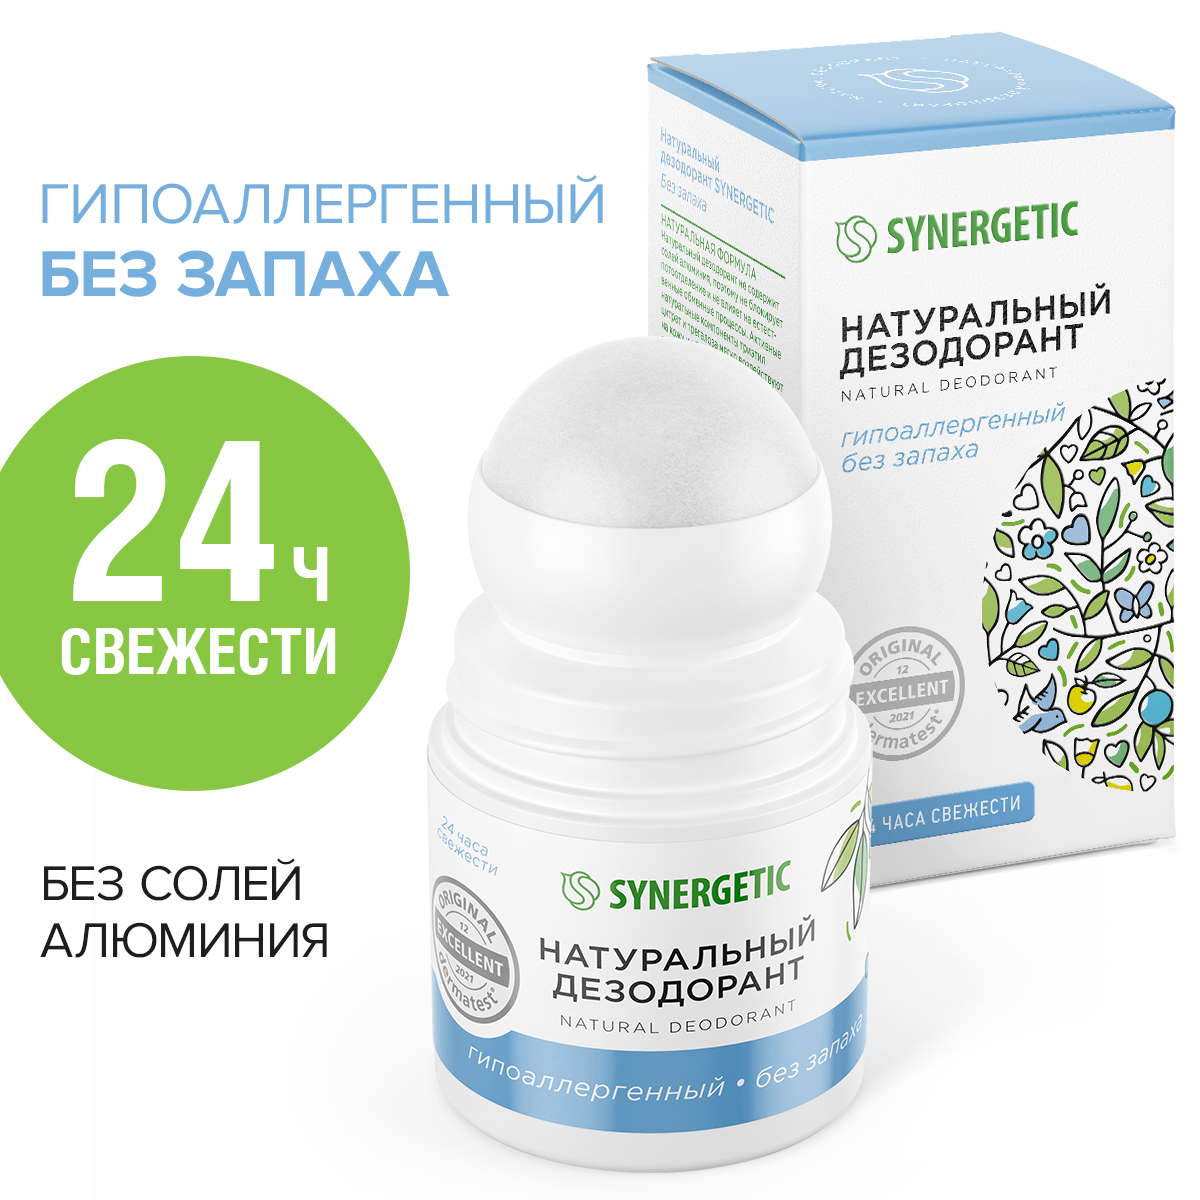 Натуральный дезодорант SYNERGETIC без запаха synergetic натуральный дезодорант лемонграсс эвкалипт 50